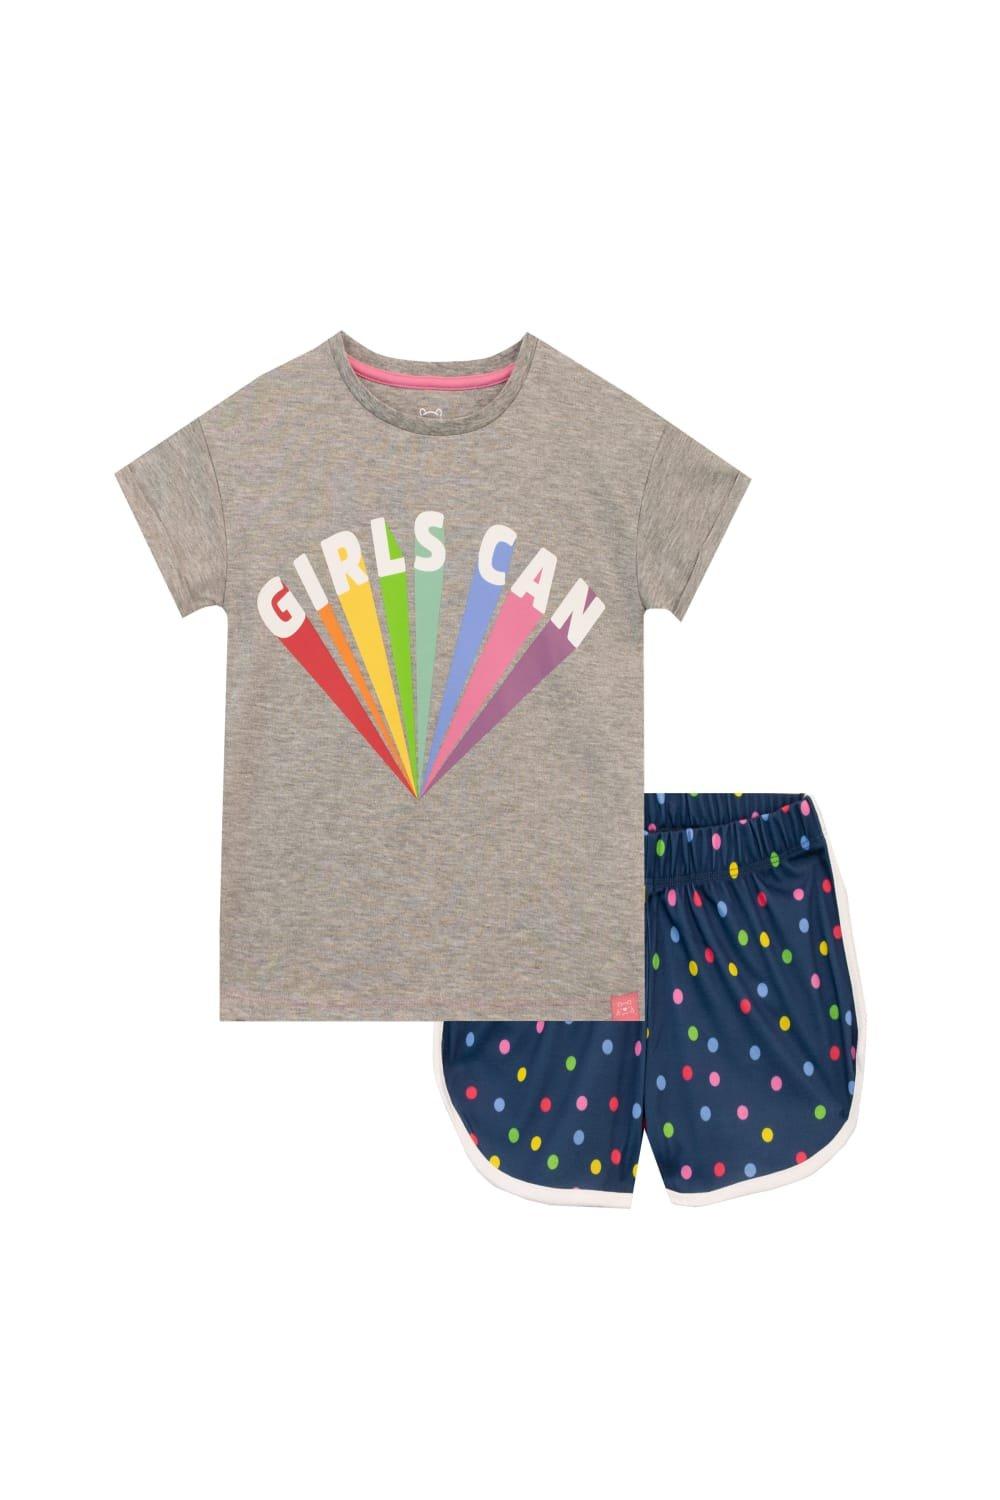 Girls Can Rainbow Dream Pyjamas